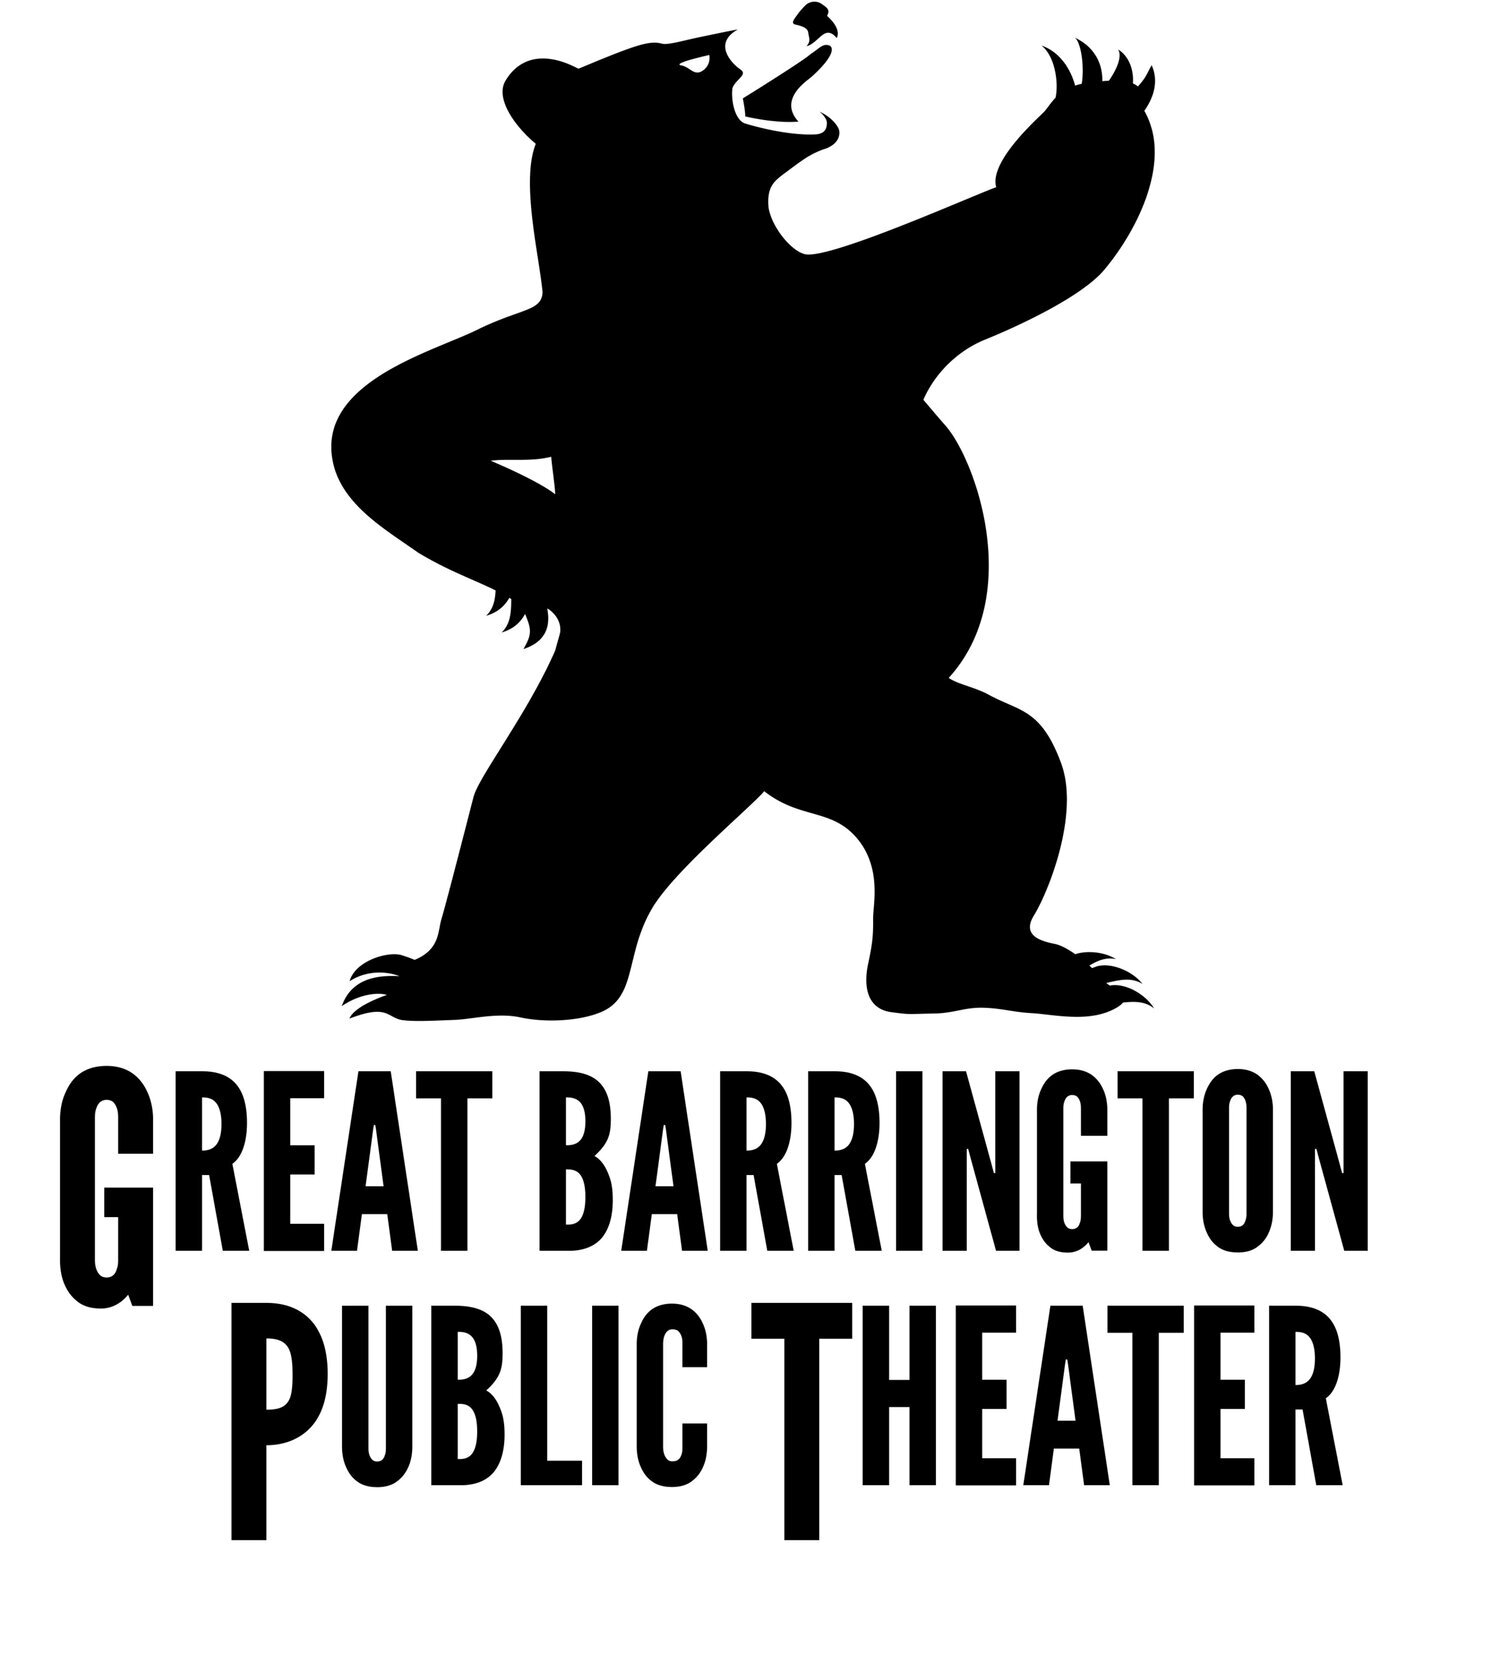 Great Barrington Public Theater